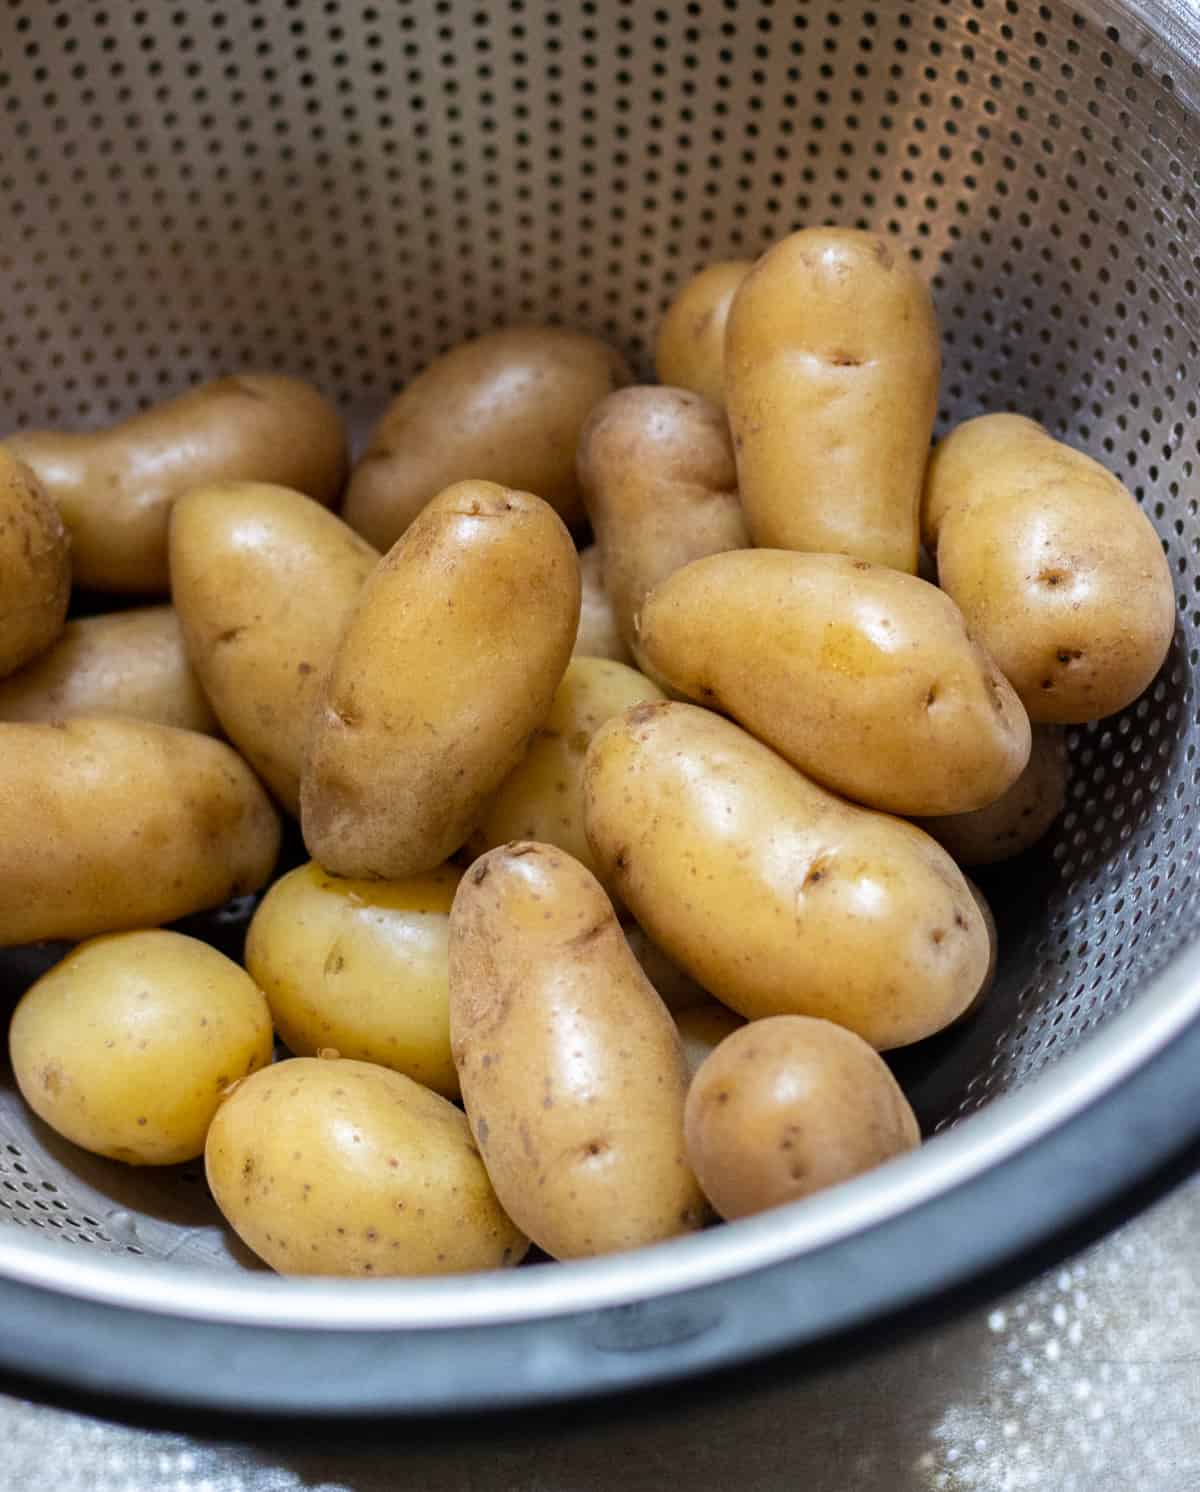 Boiled fingerling potatoes in a metal colander.